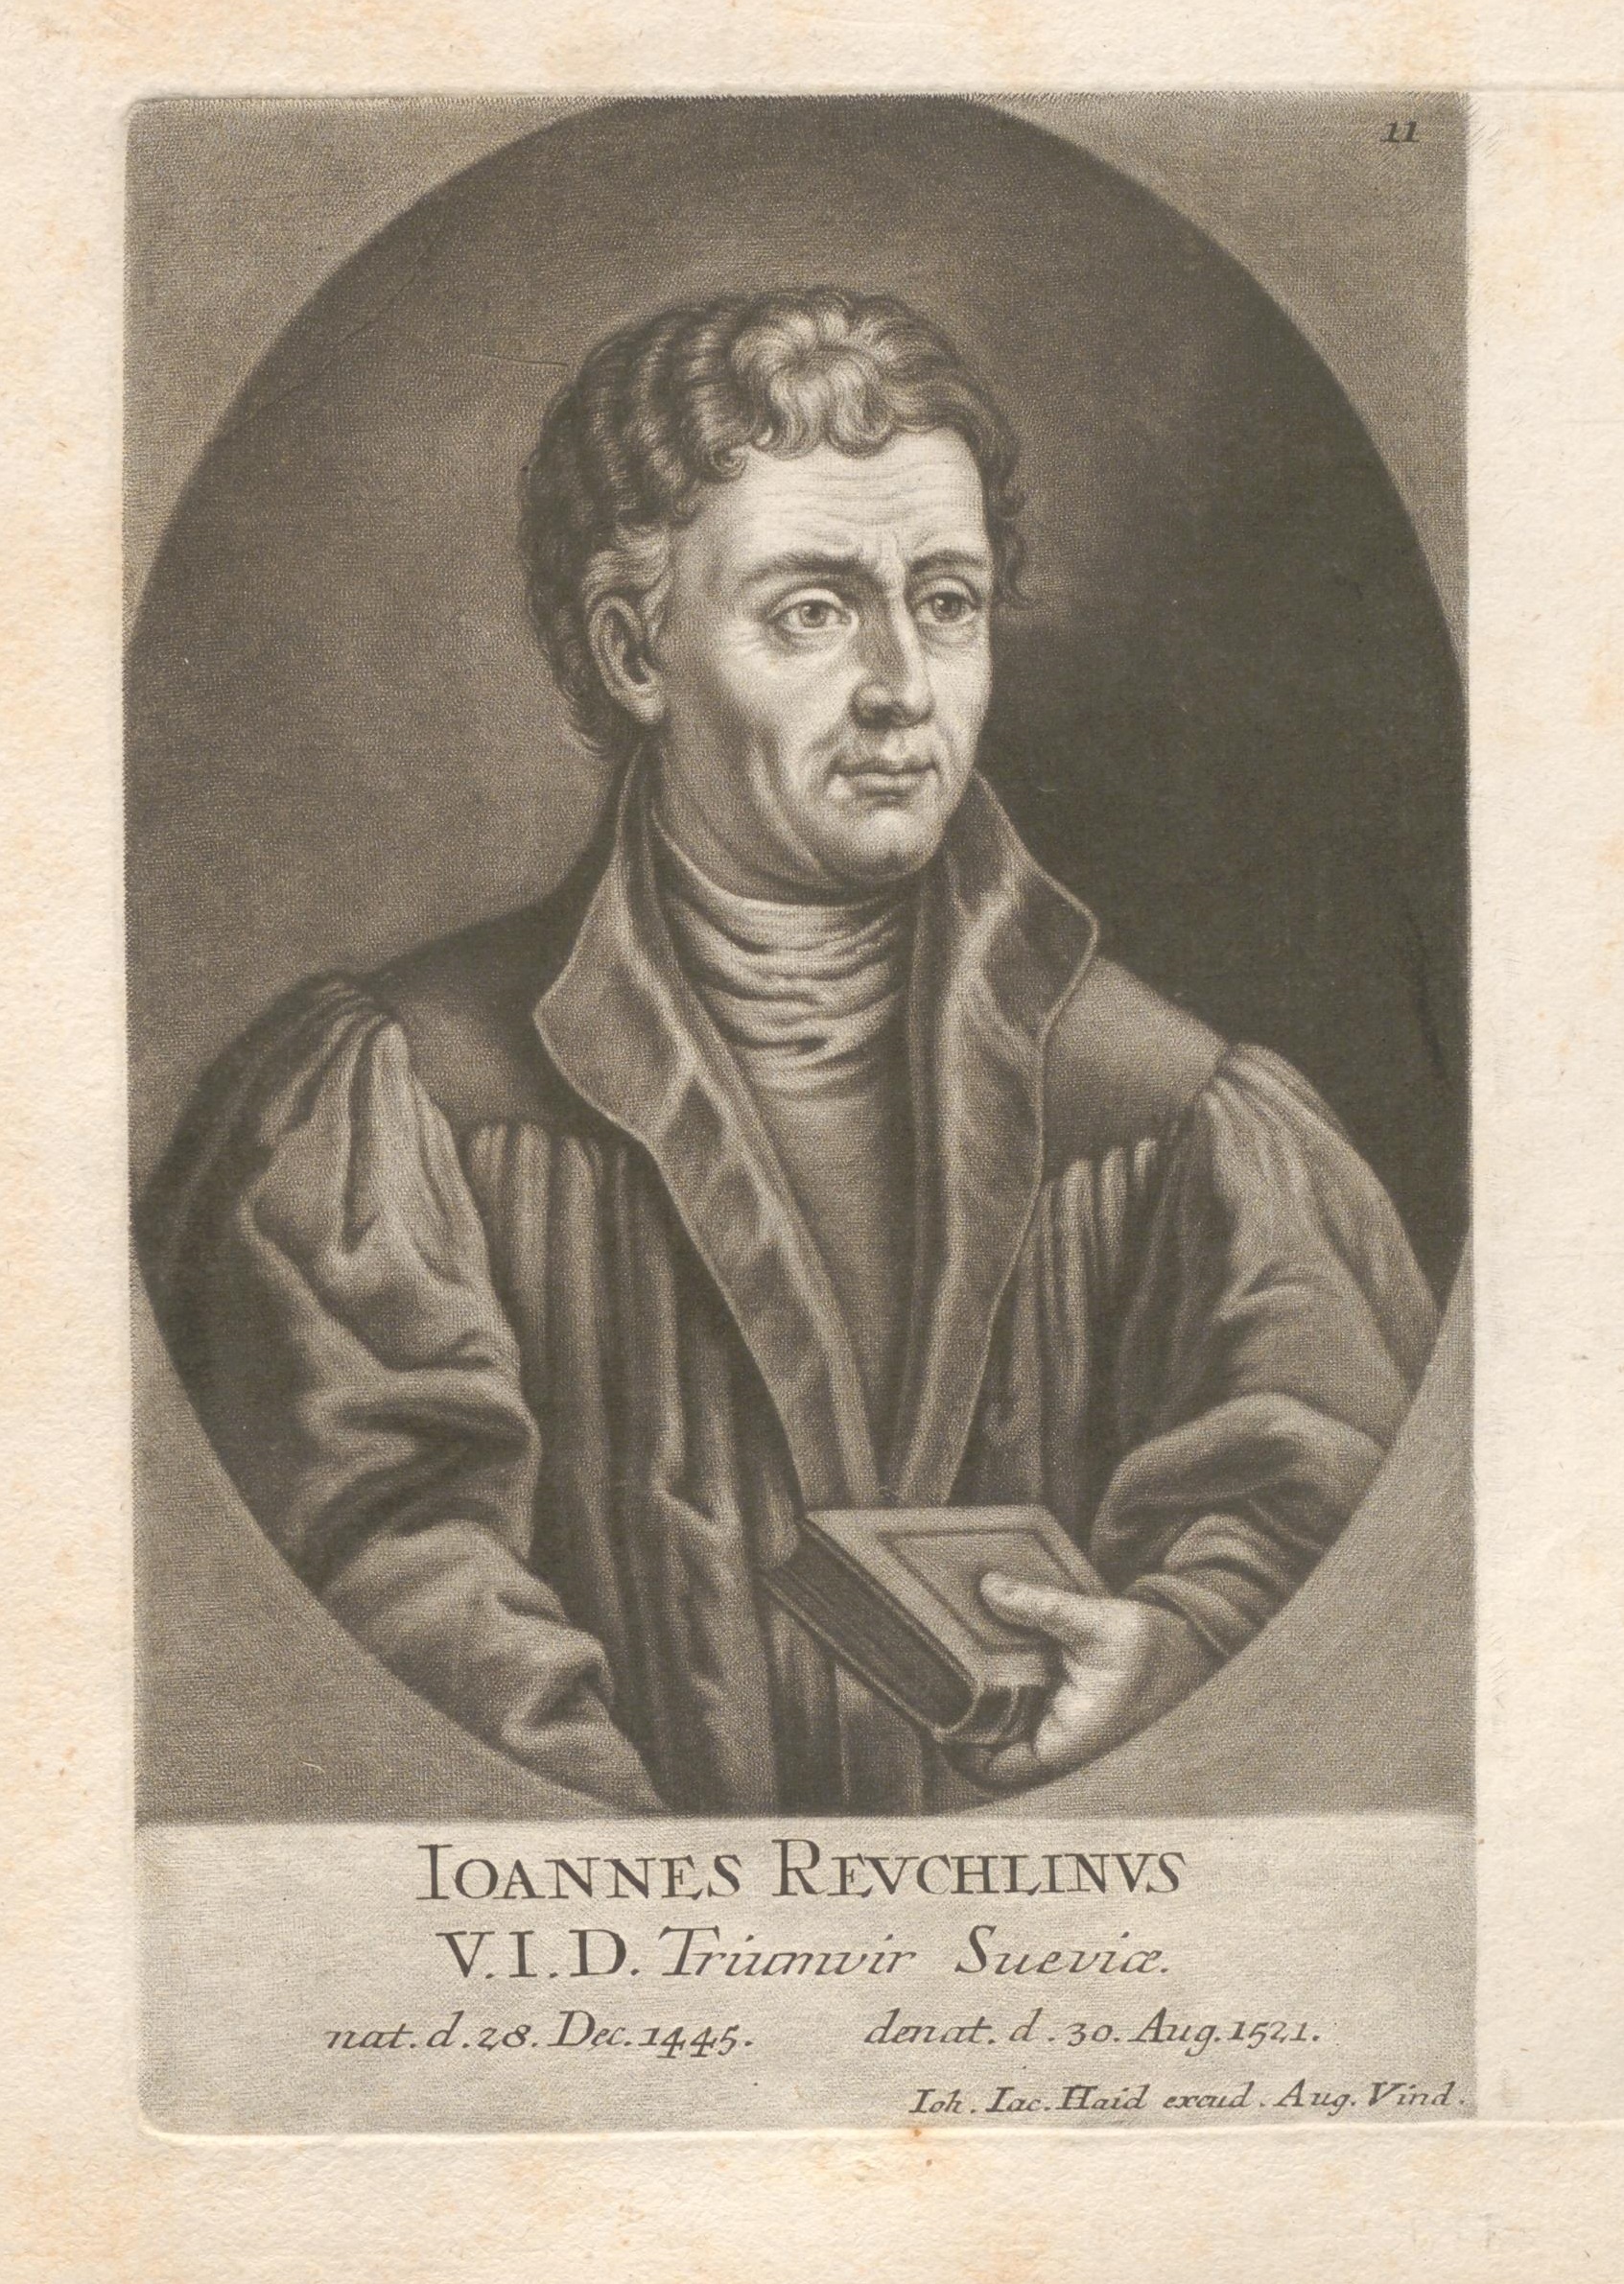 Porträt von Johannes Reuchlin, 18. Jh., Badische Landesbibliothek, Graph Slg 3230 (an den rechten Rand)